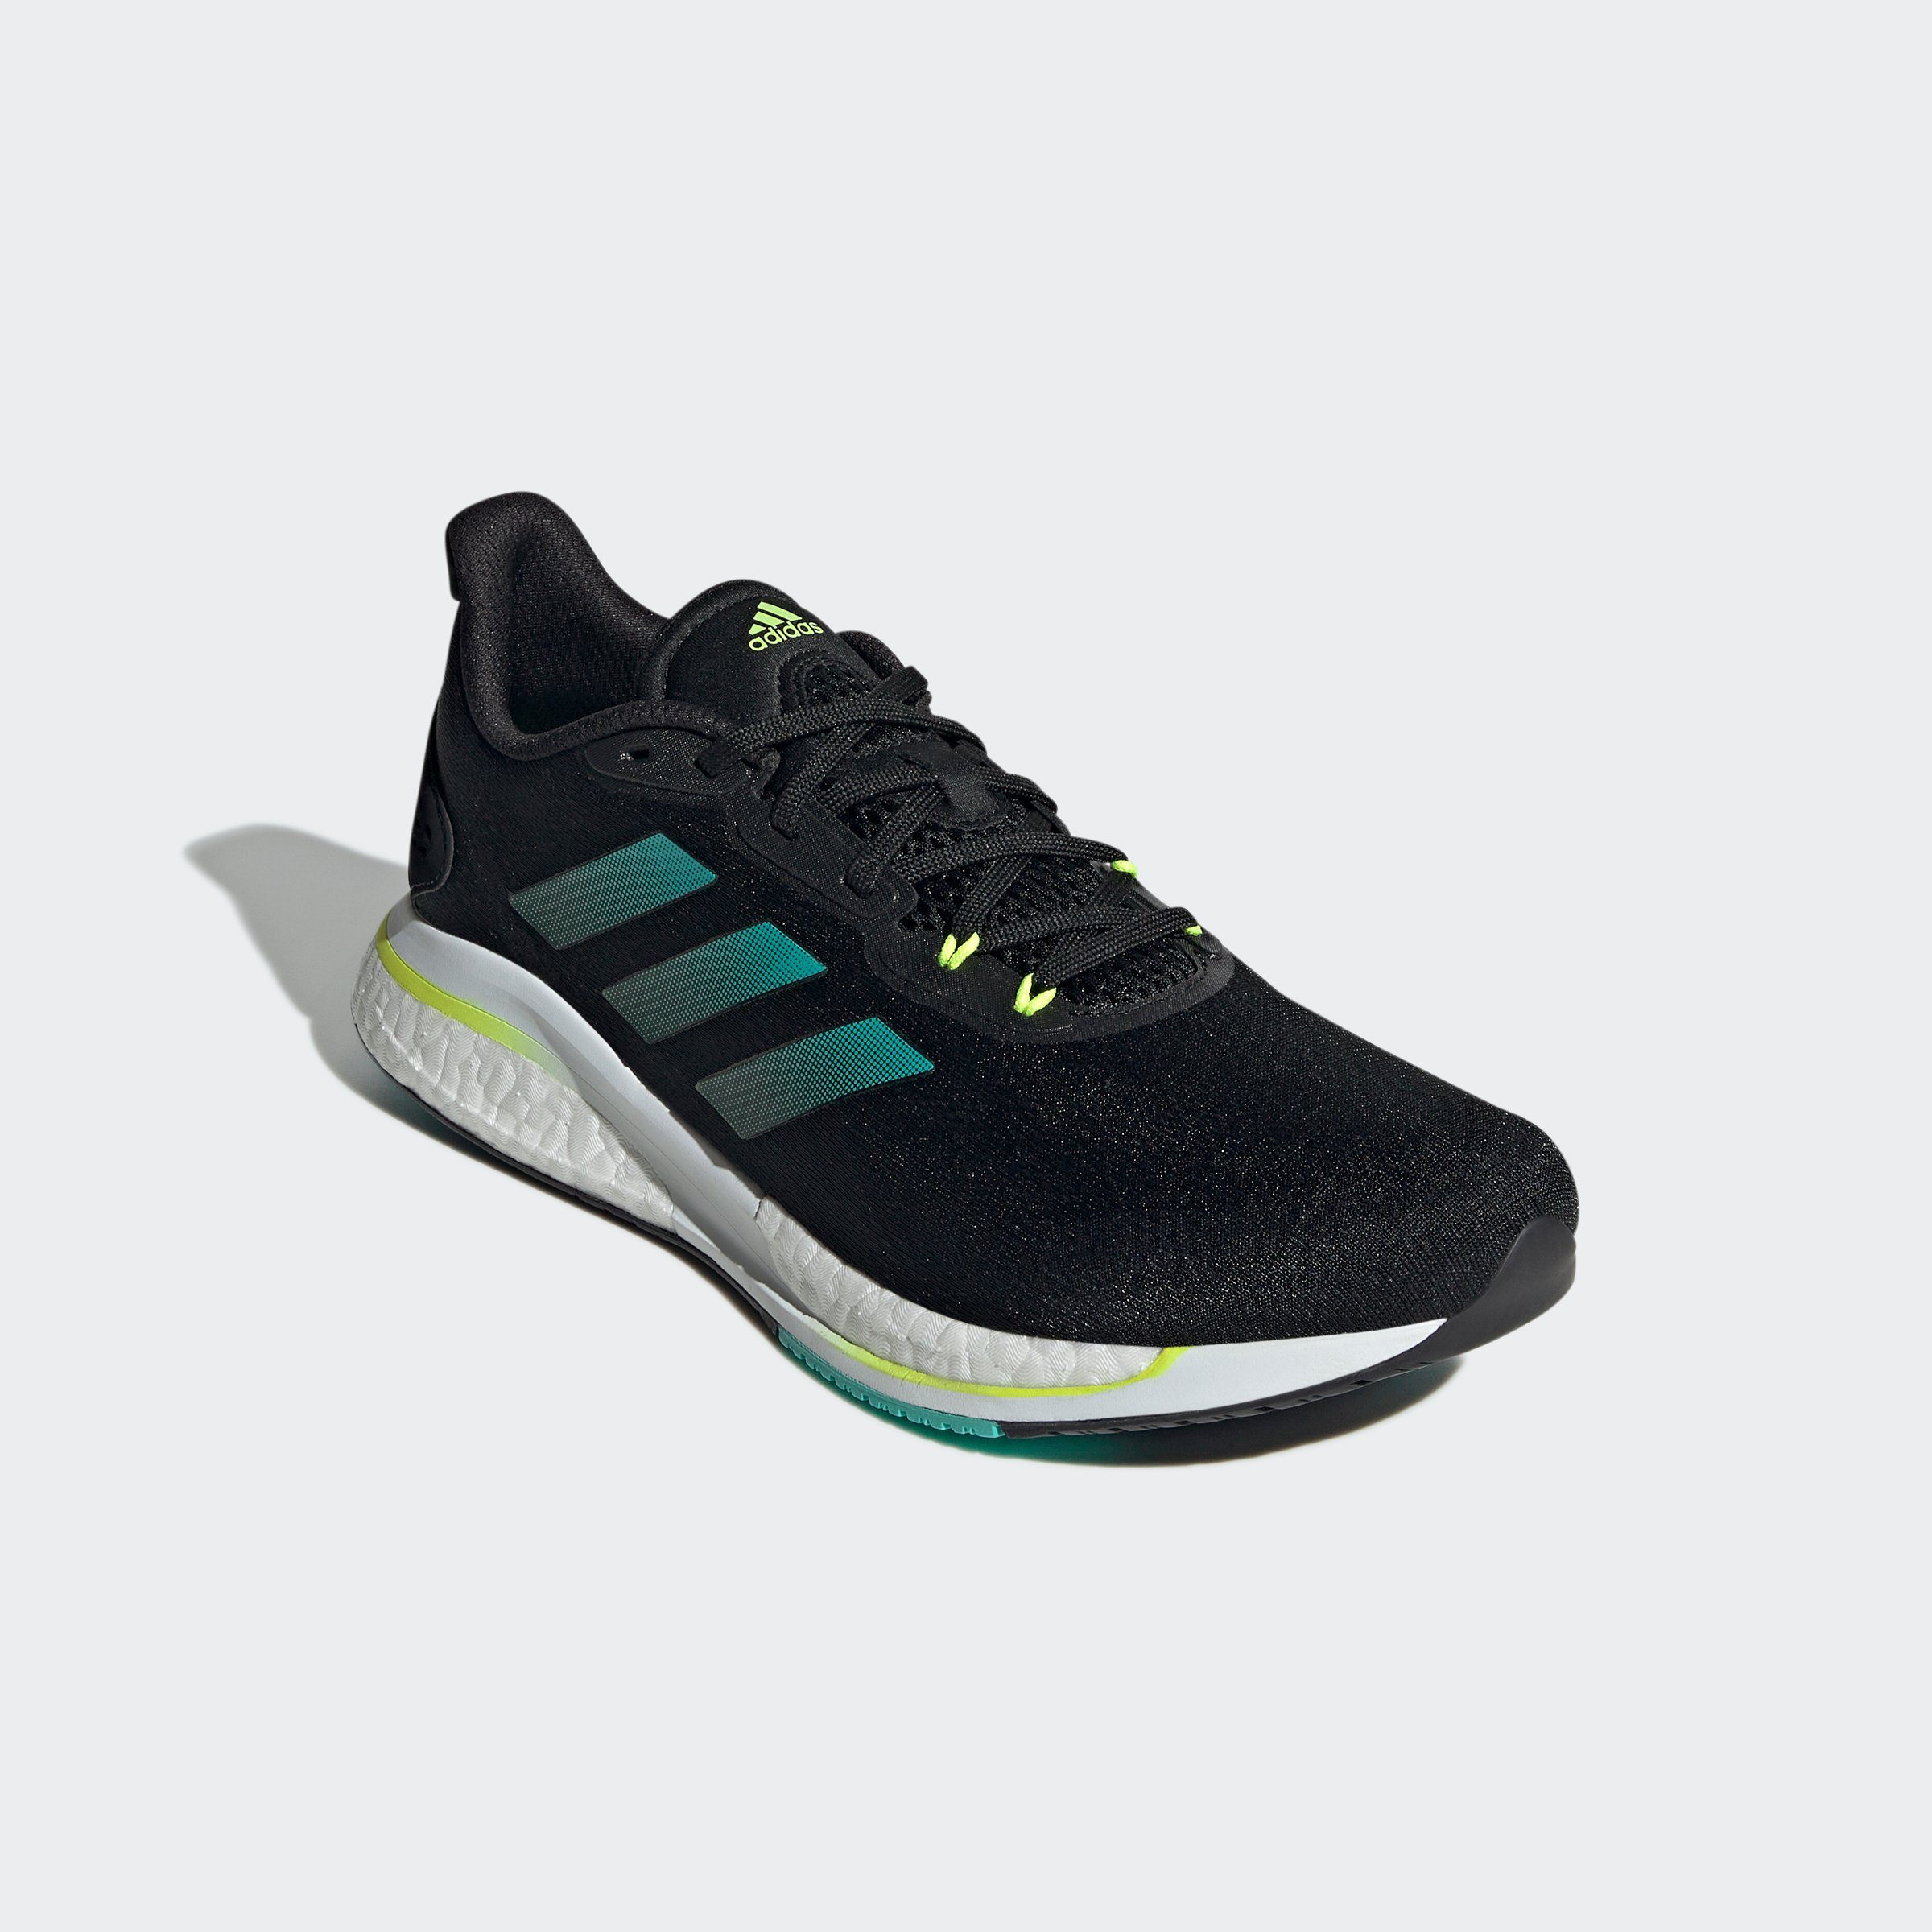 Adidas Supernova Laufschuhe online kaufen | OTTO